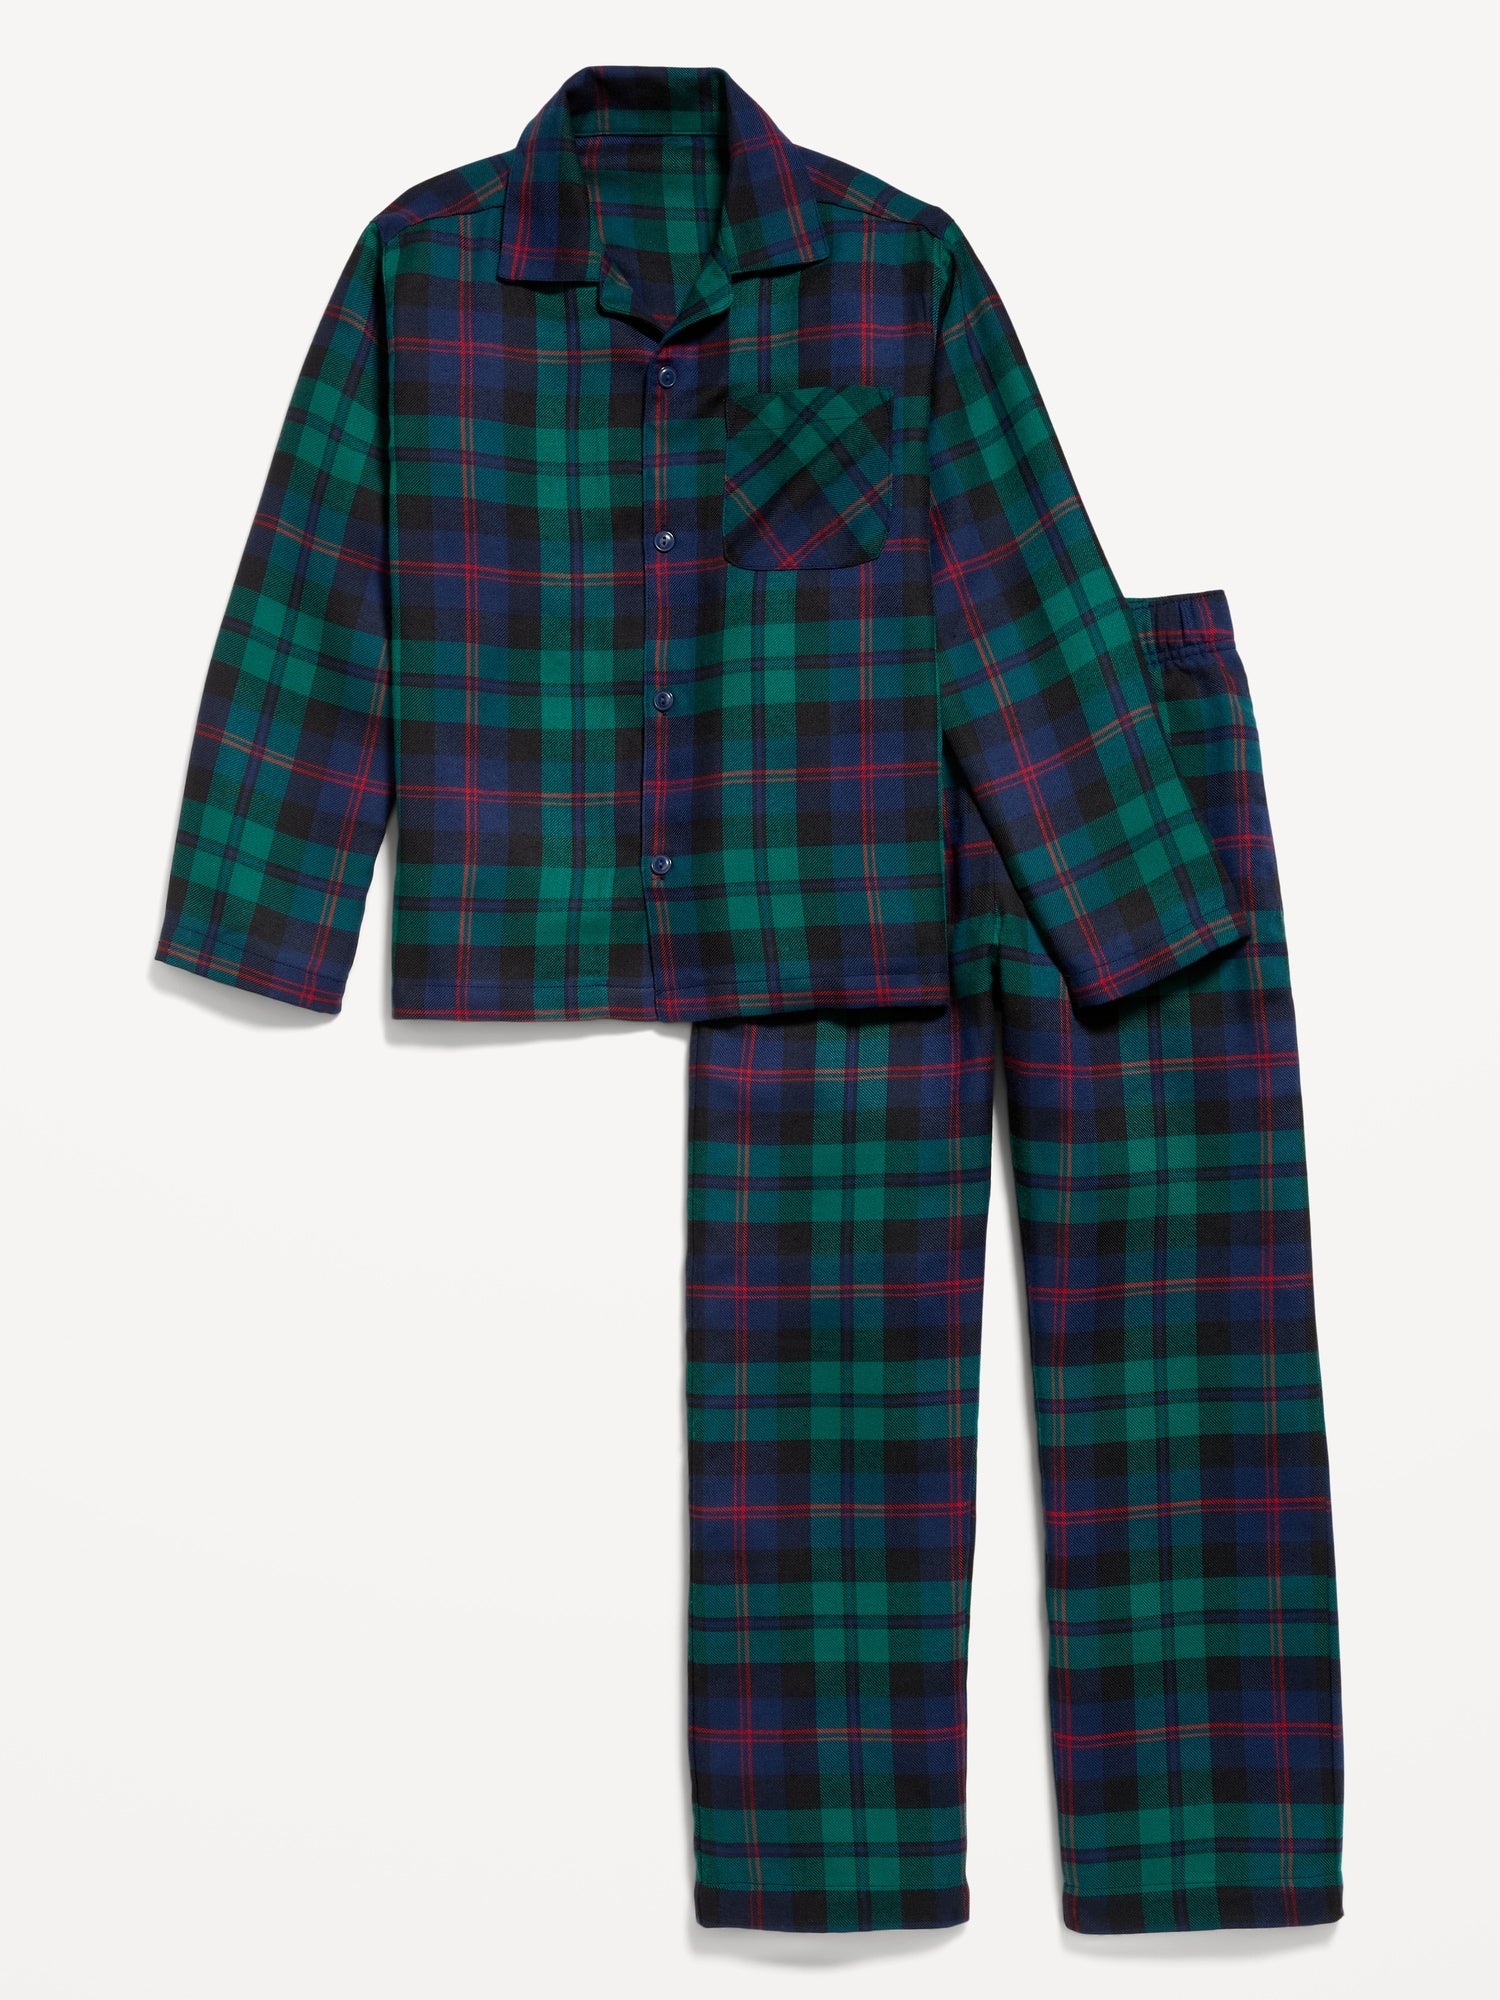 Gender-Neutral Matching Flannel Pajama Set for Kids - Old Navy